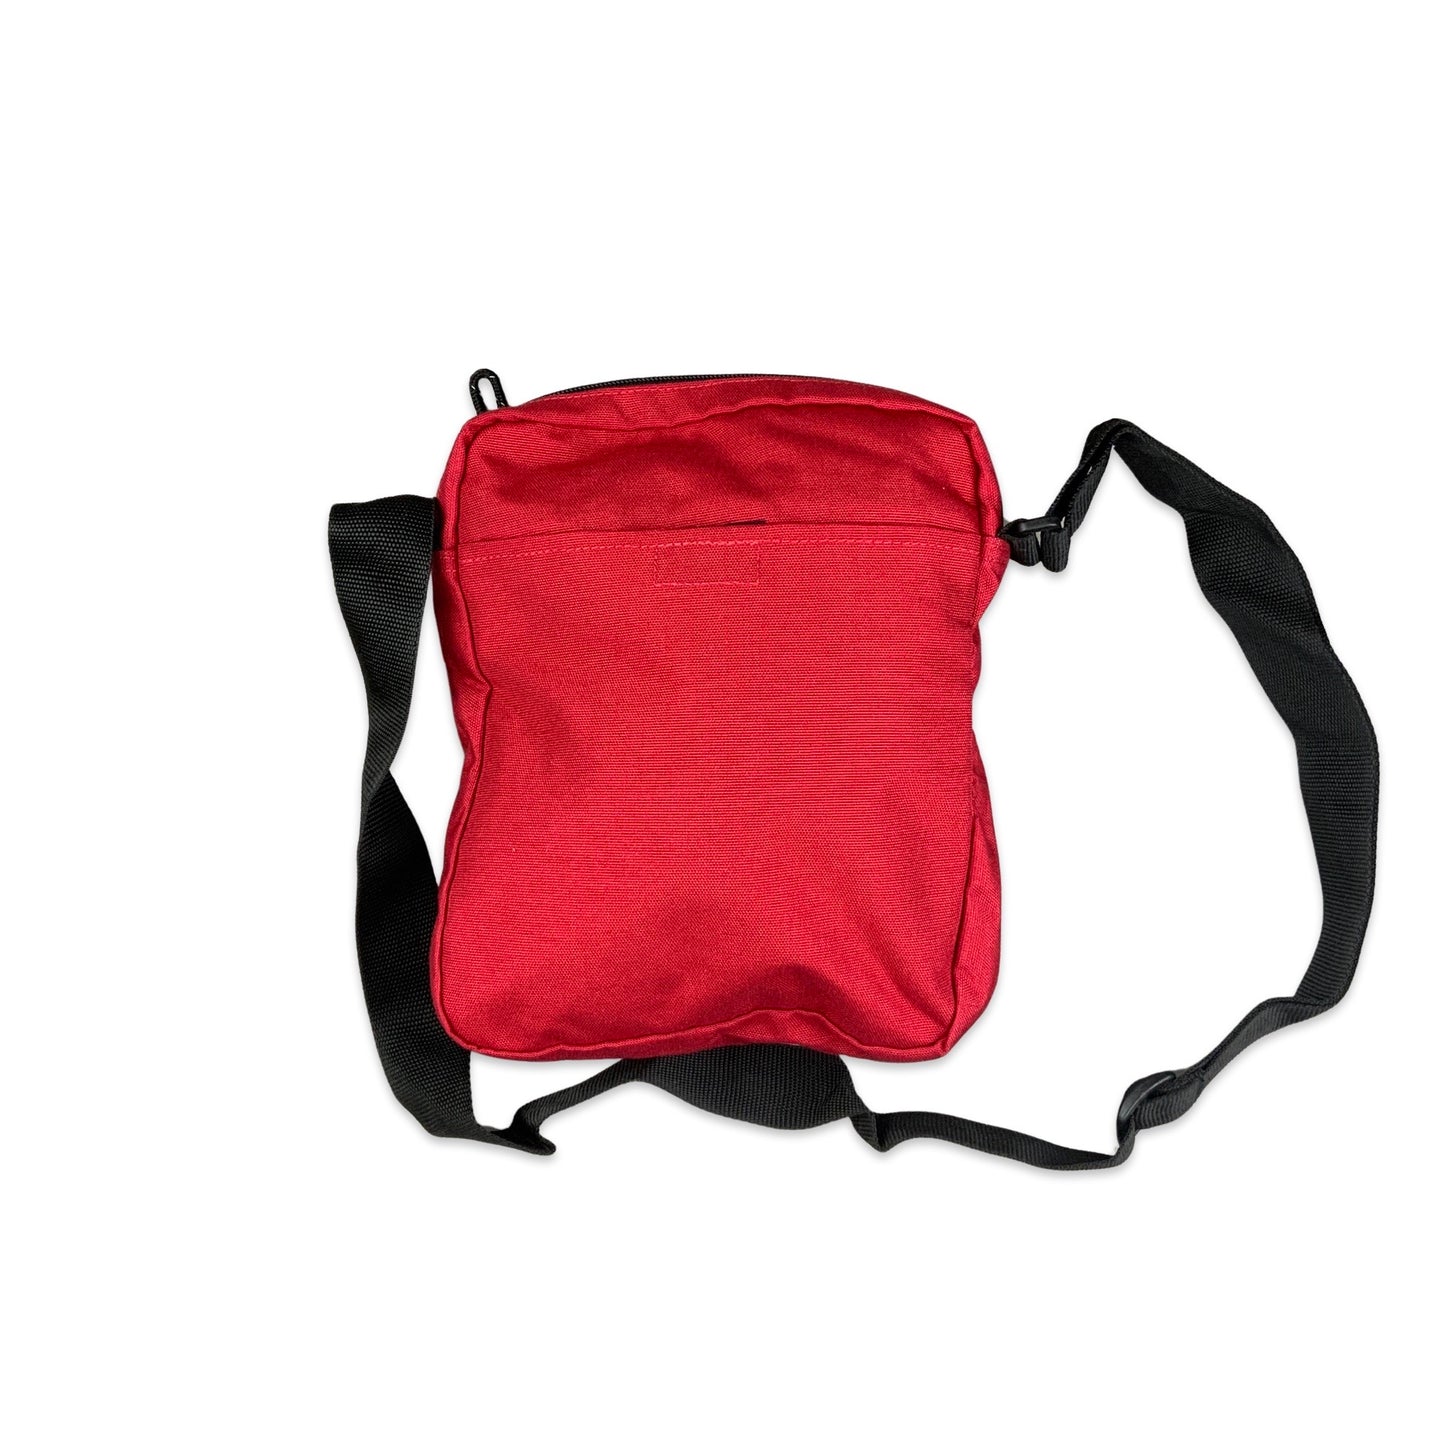 Eastpak Red Crossbody Bag